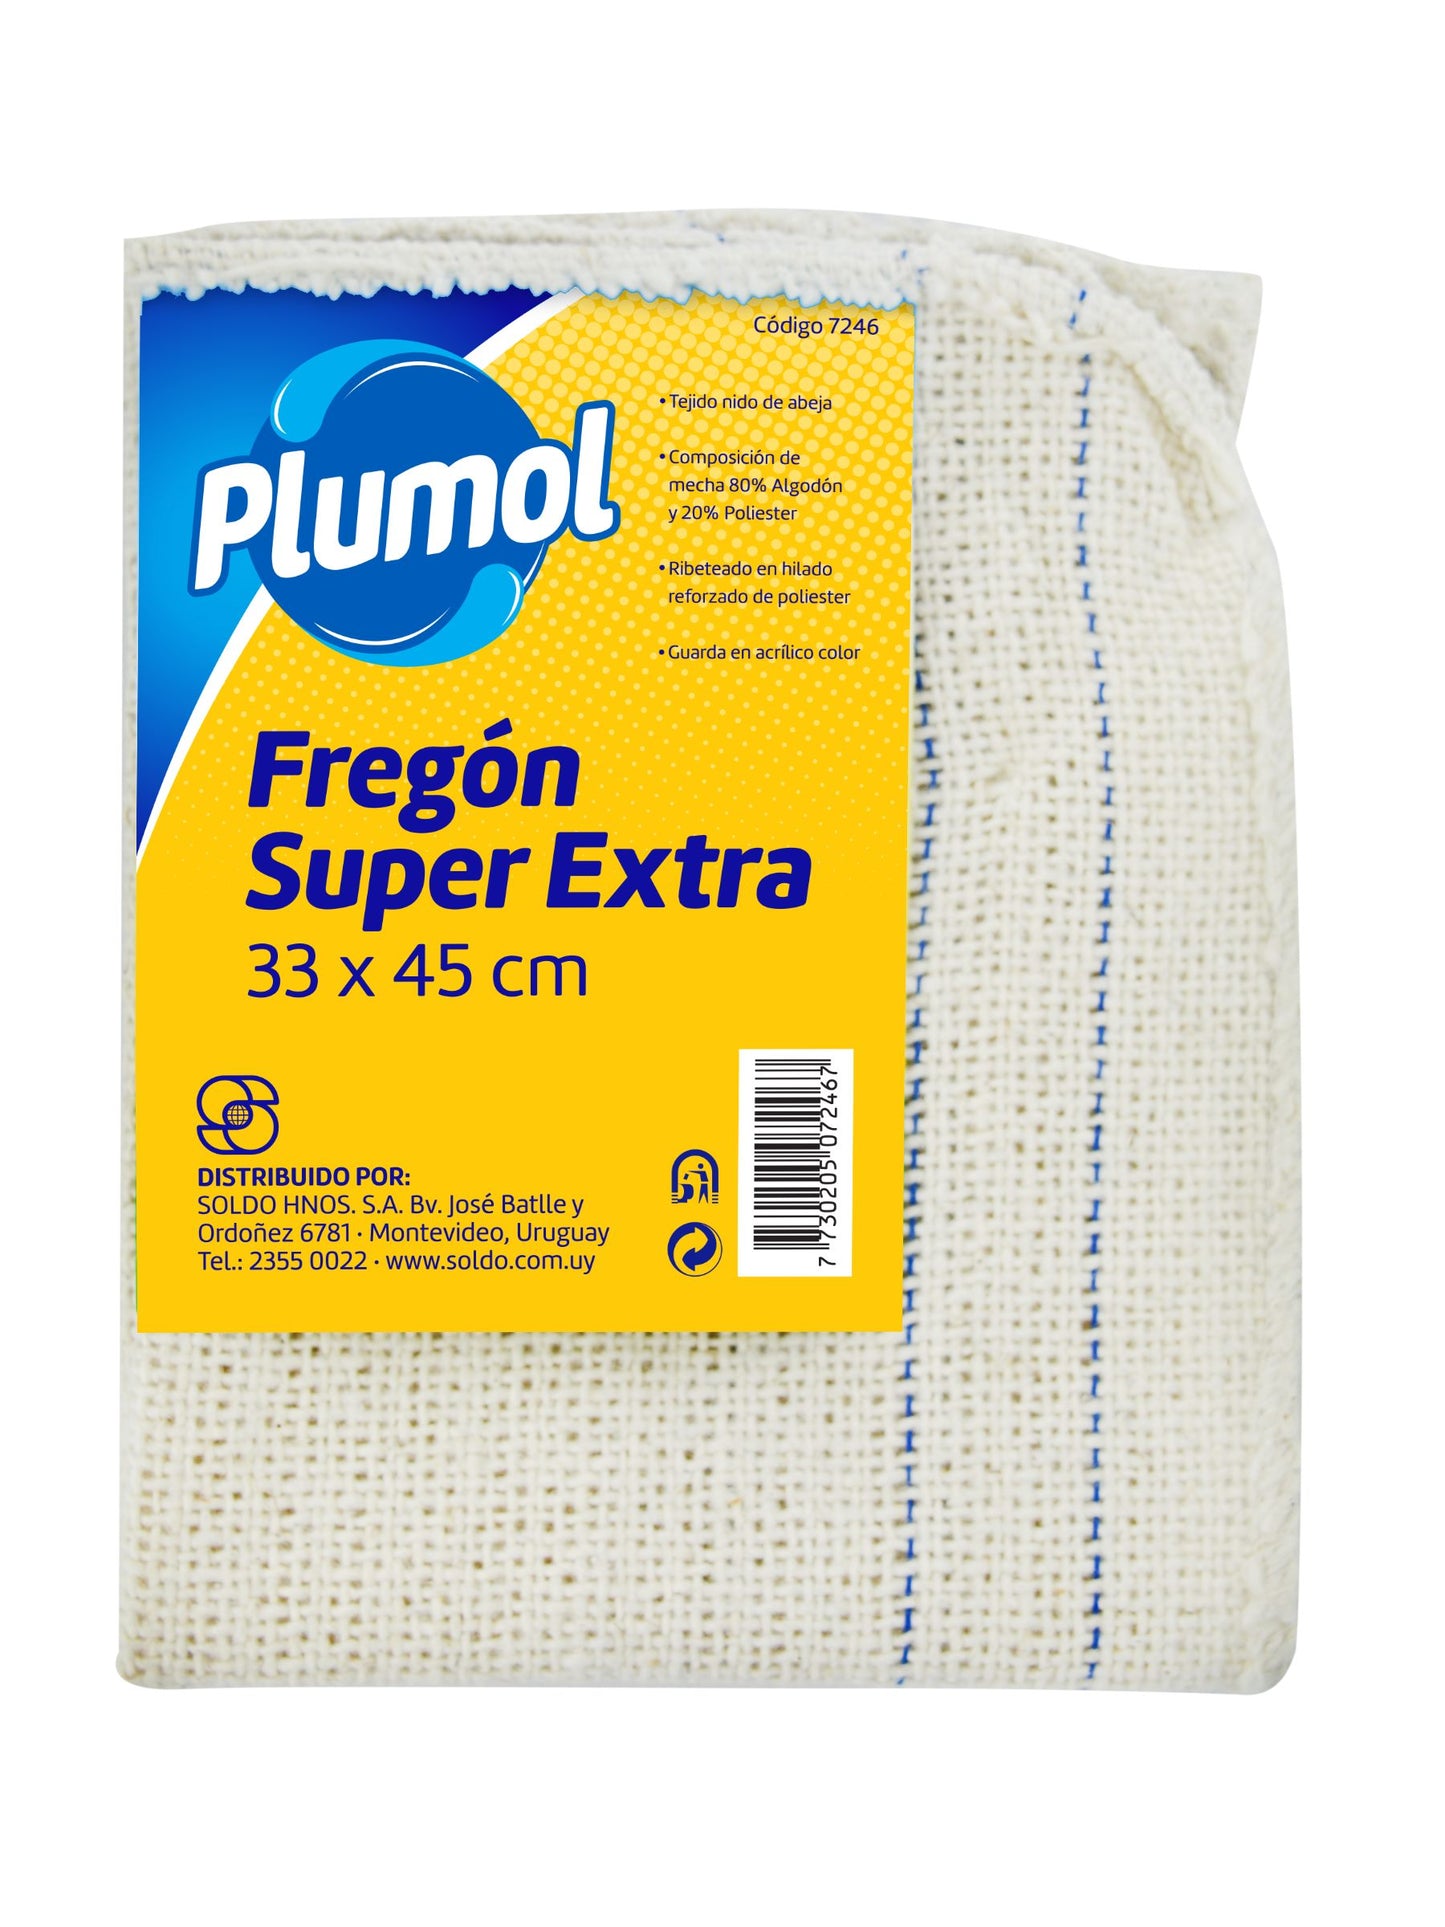 Fregon super extra 33x45 Plumol